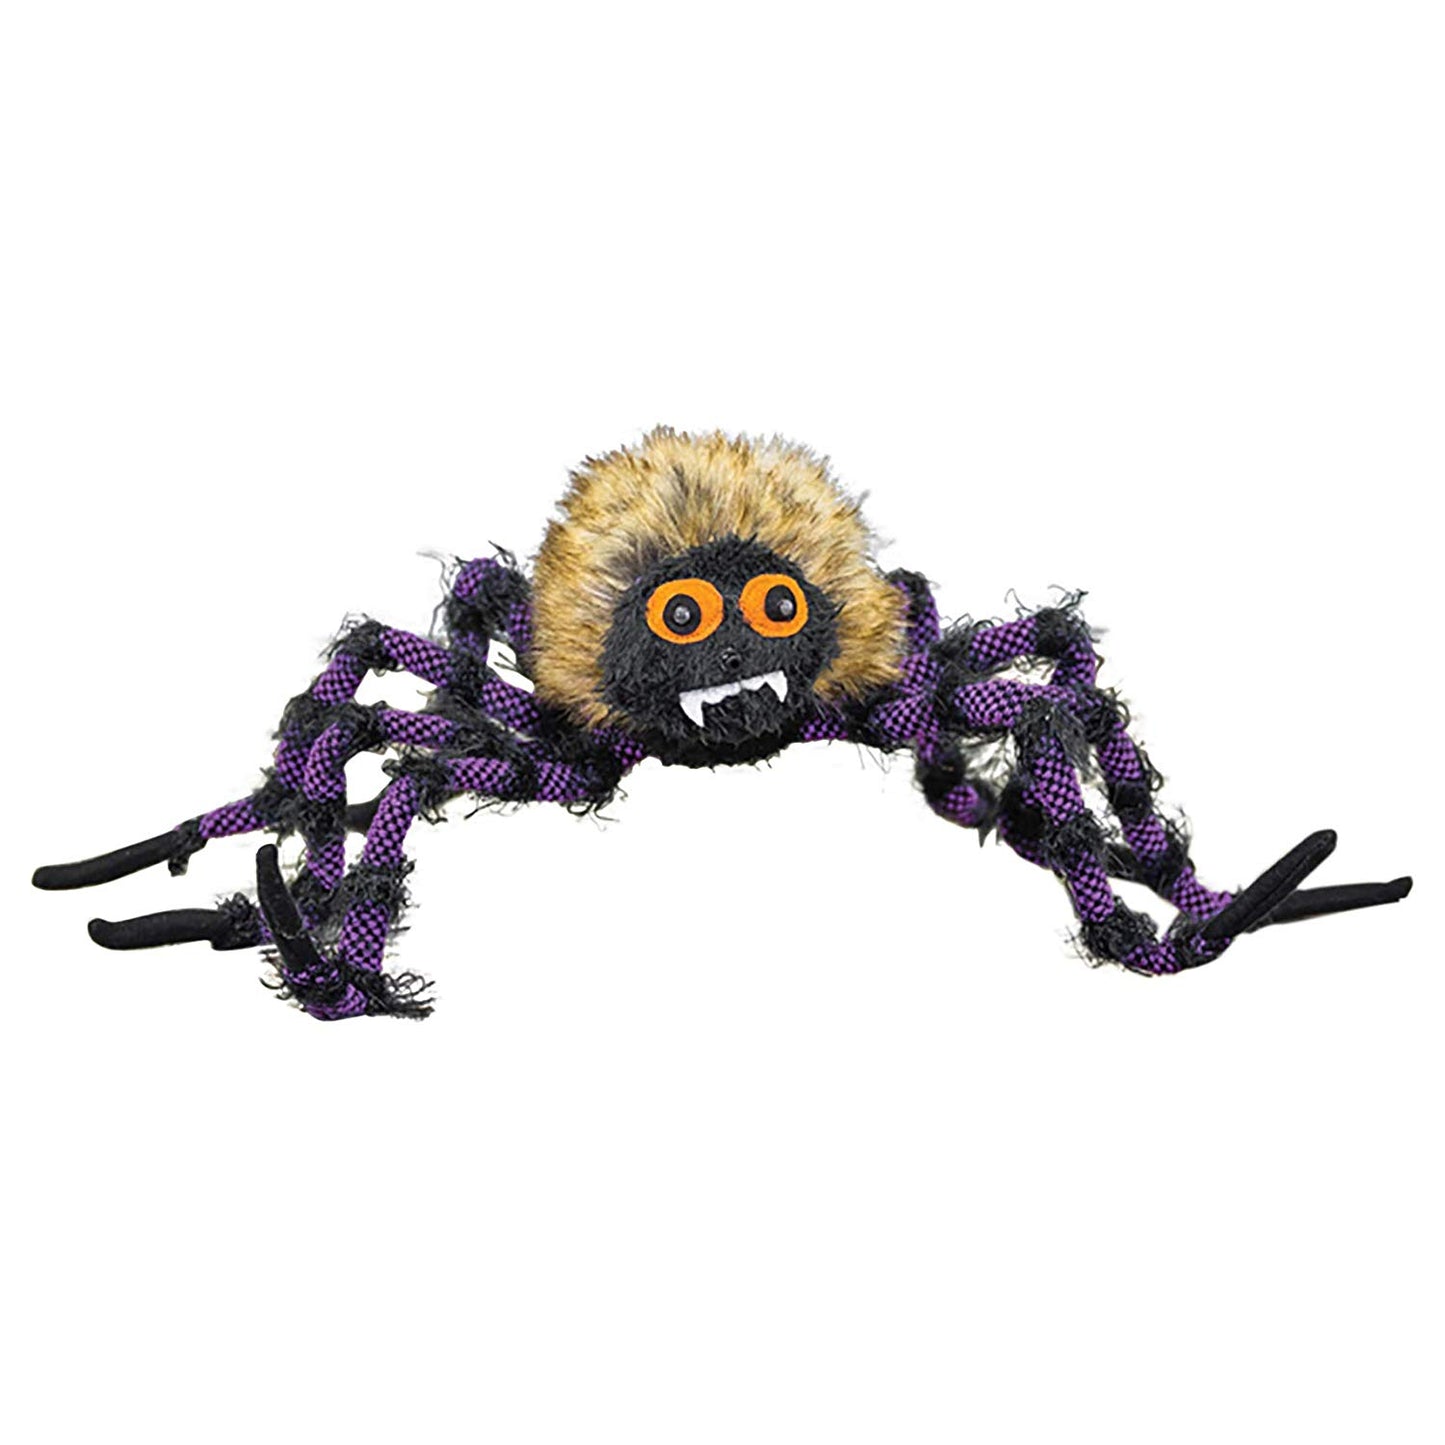 Fuzzy Animated Halloween spider